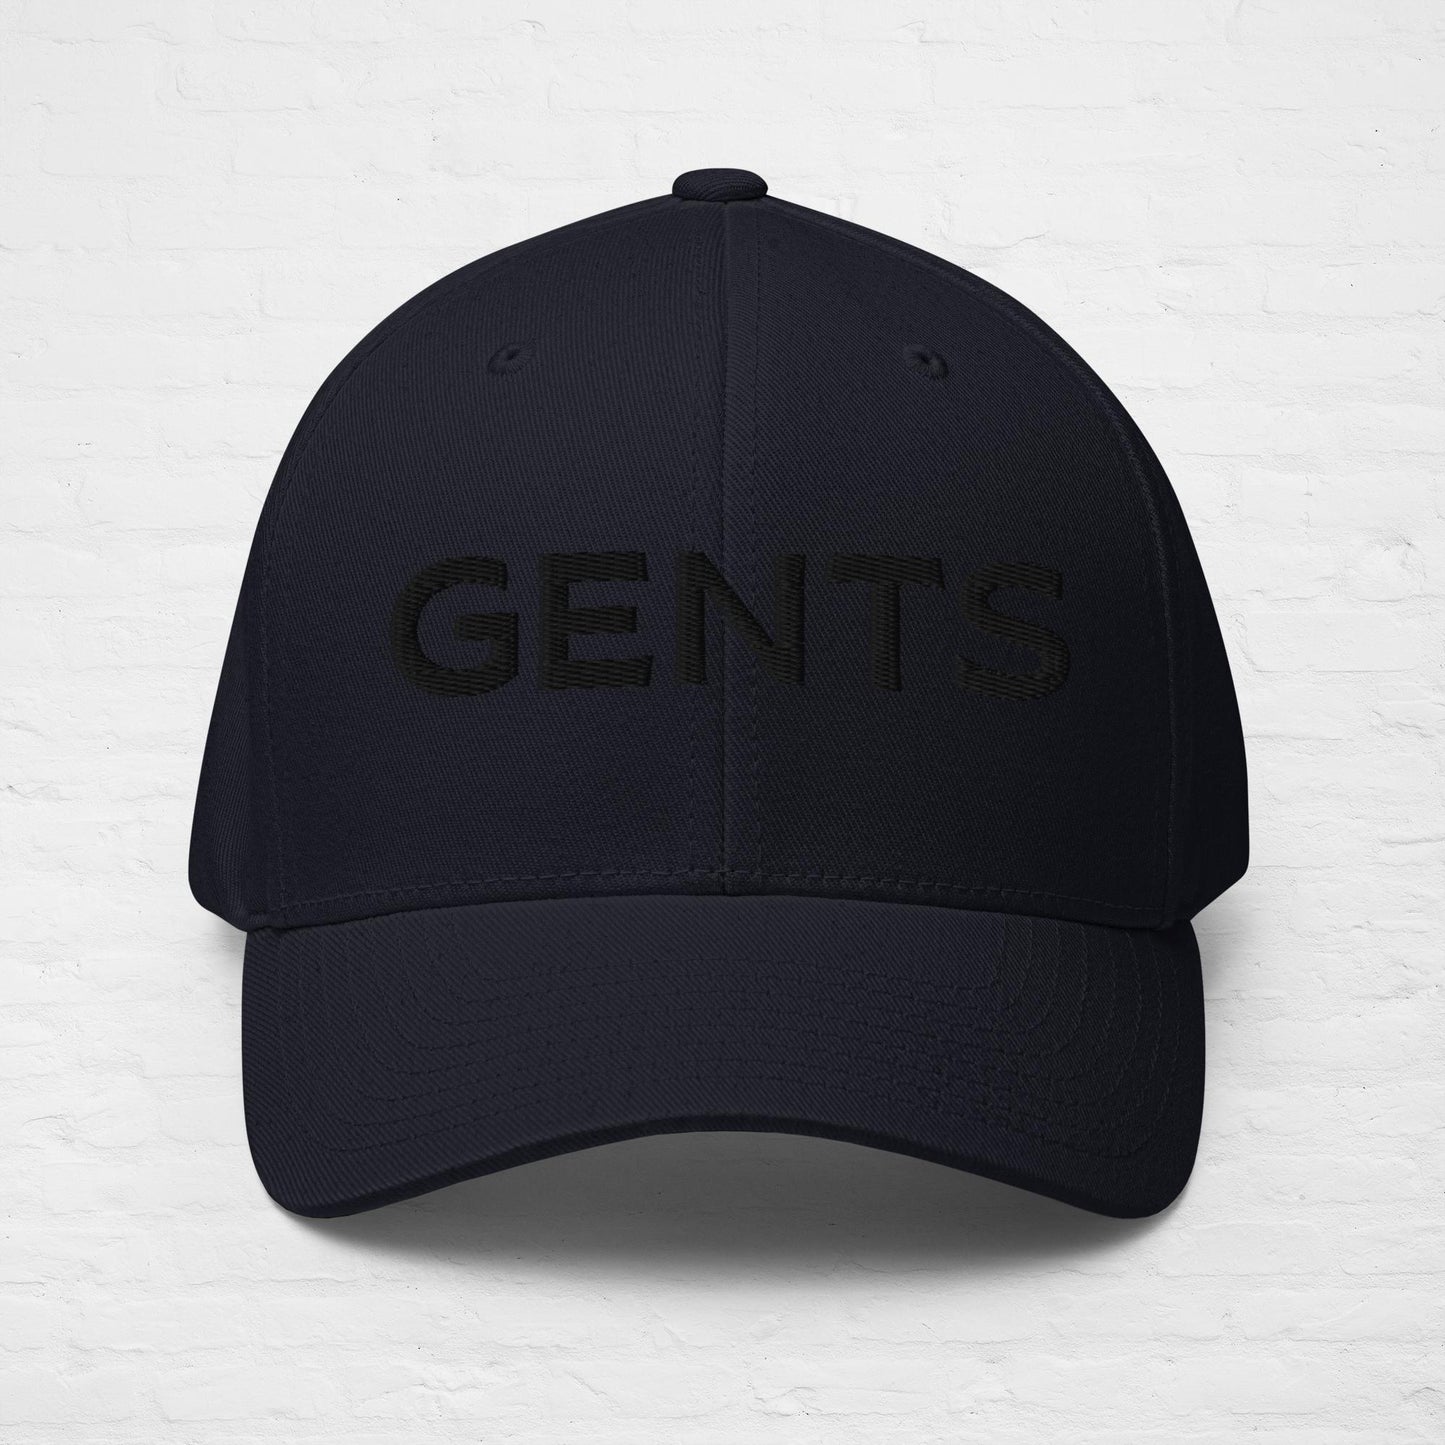 GENTS Black Structured Cap